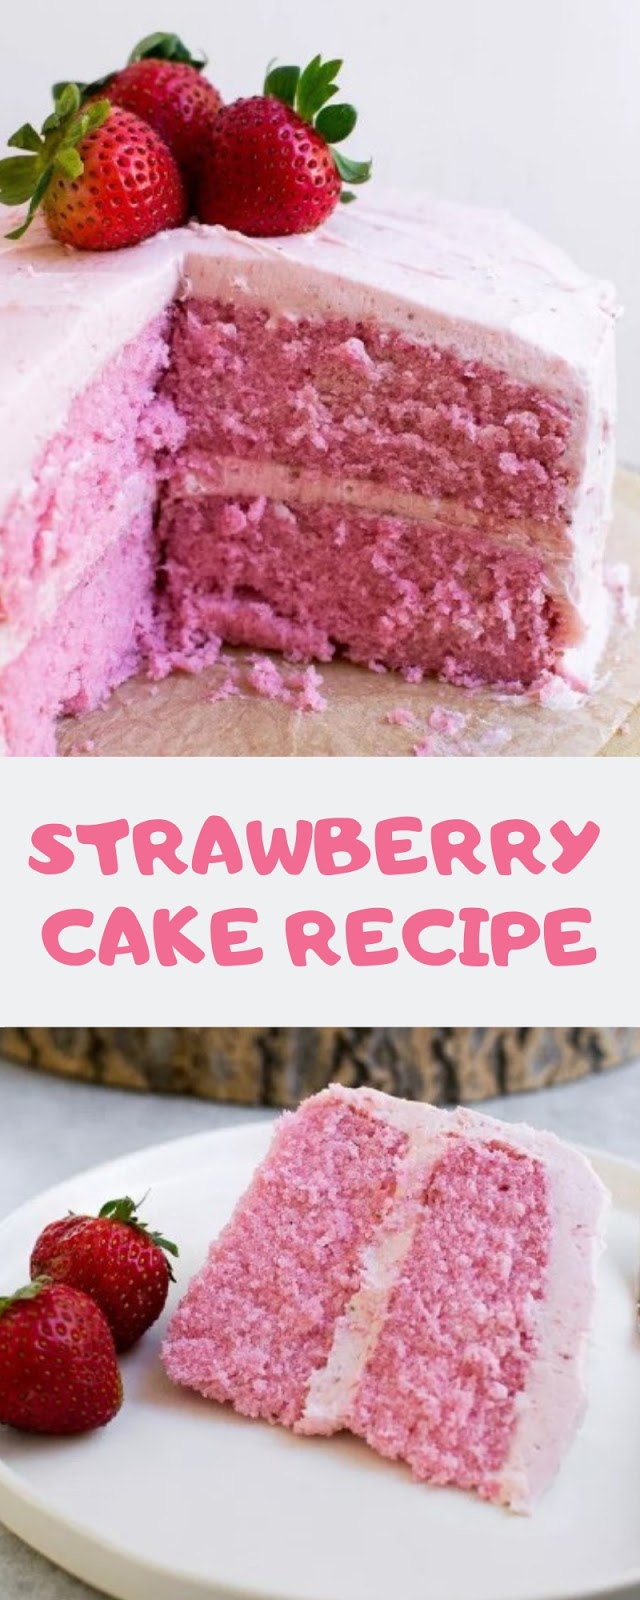 STRAWBERRY CAKE RECIPE